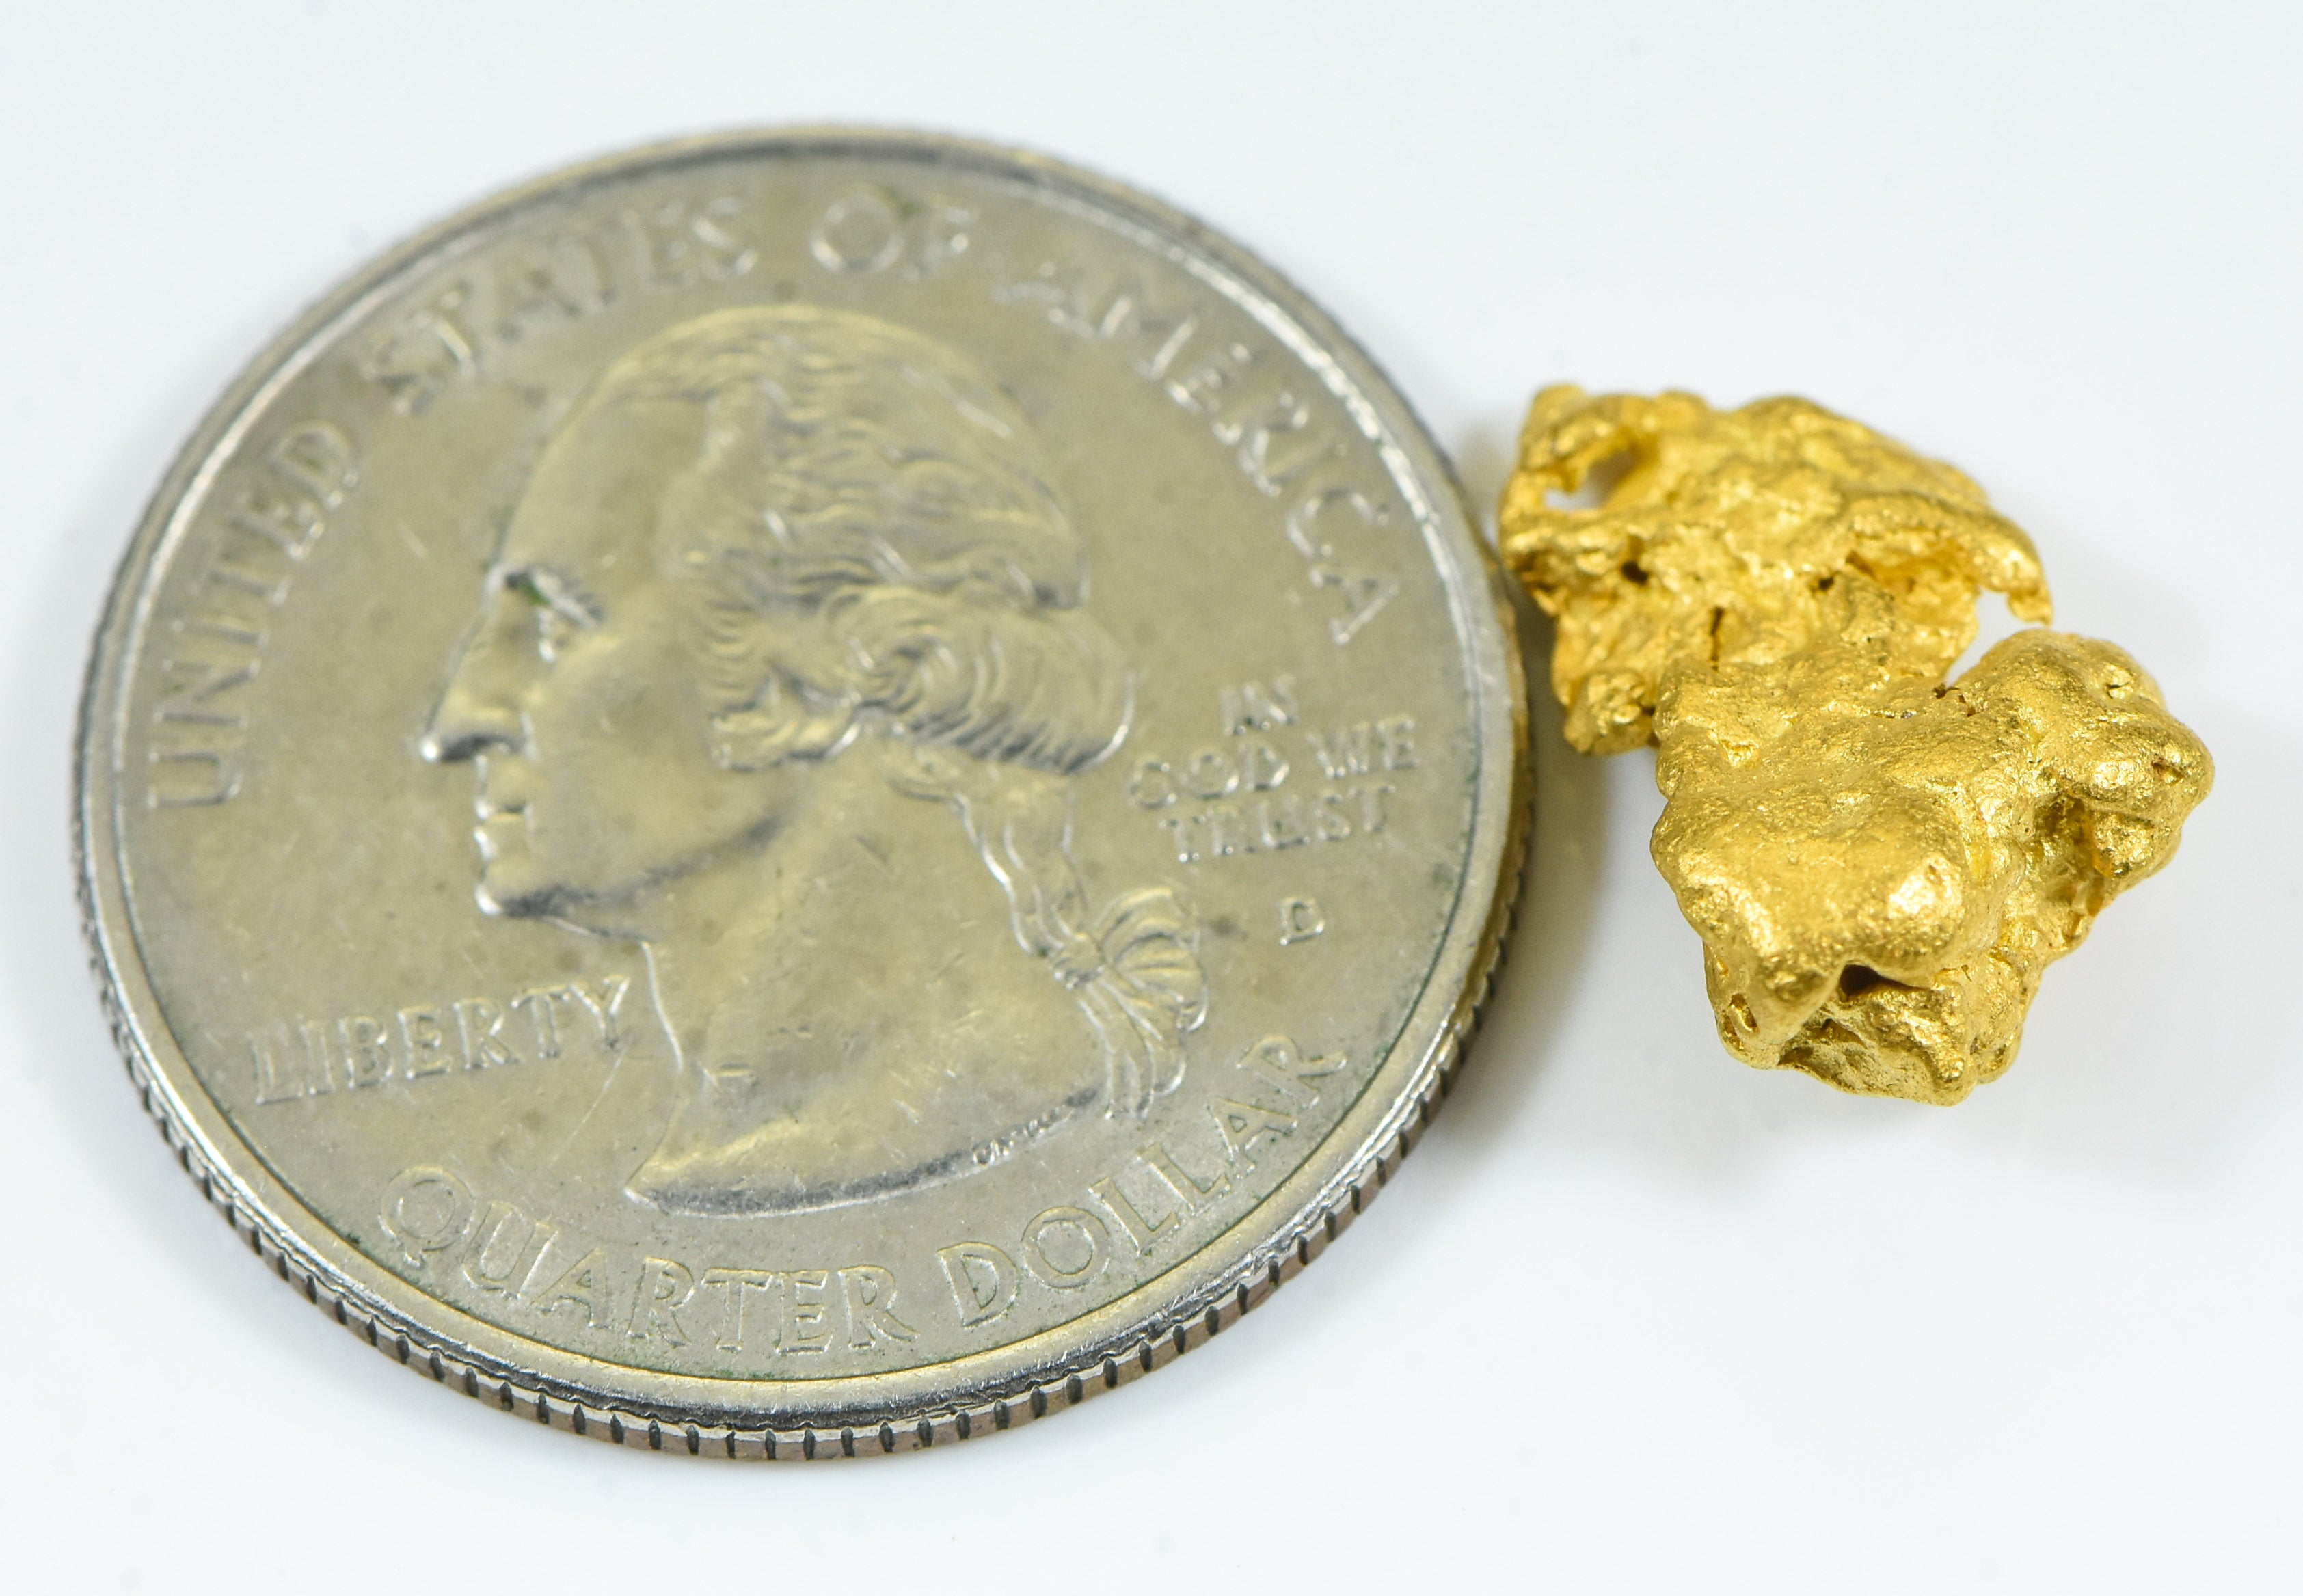 #975 Natural Gold Nugget Australian 4.20 Grams Genuine